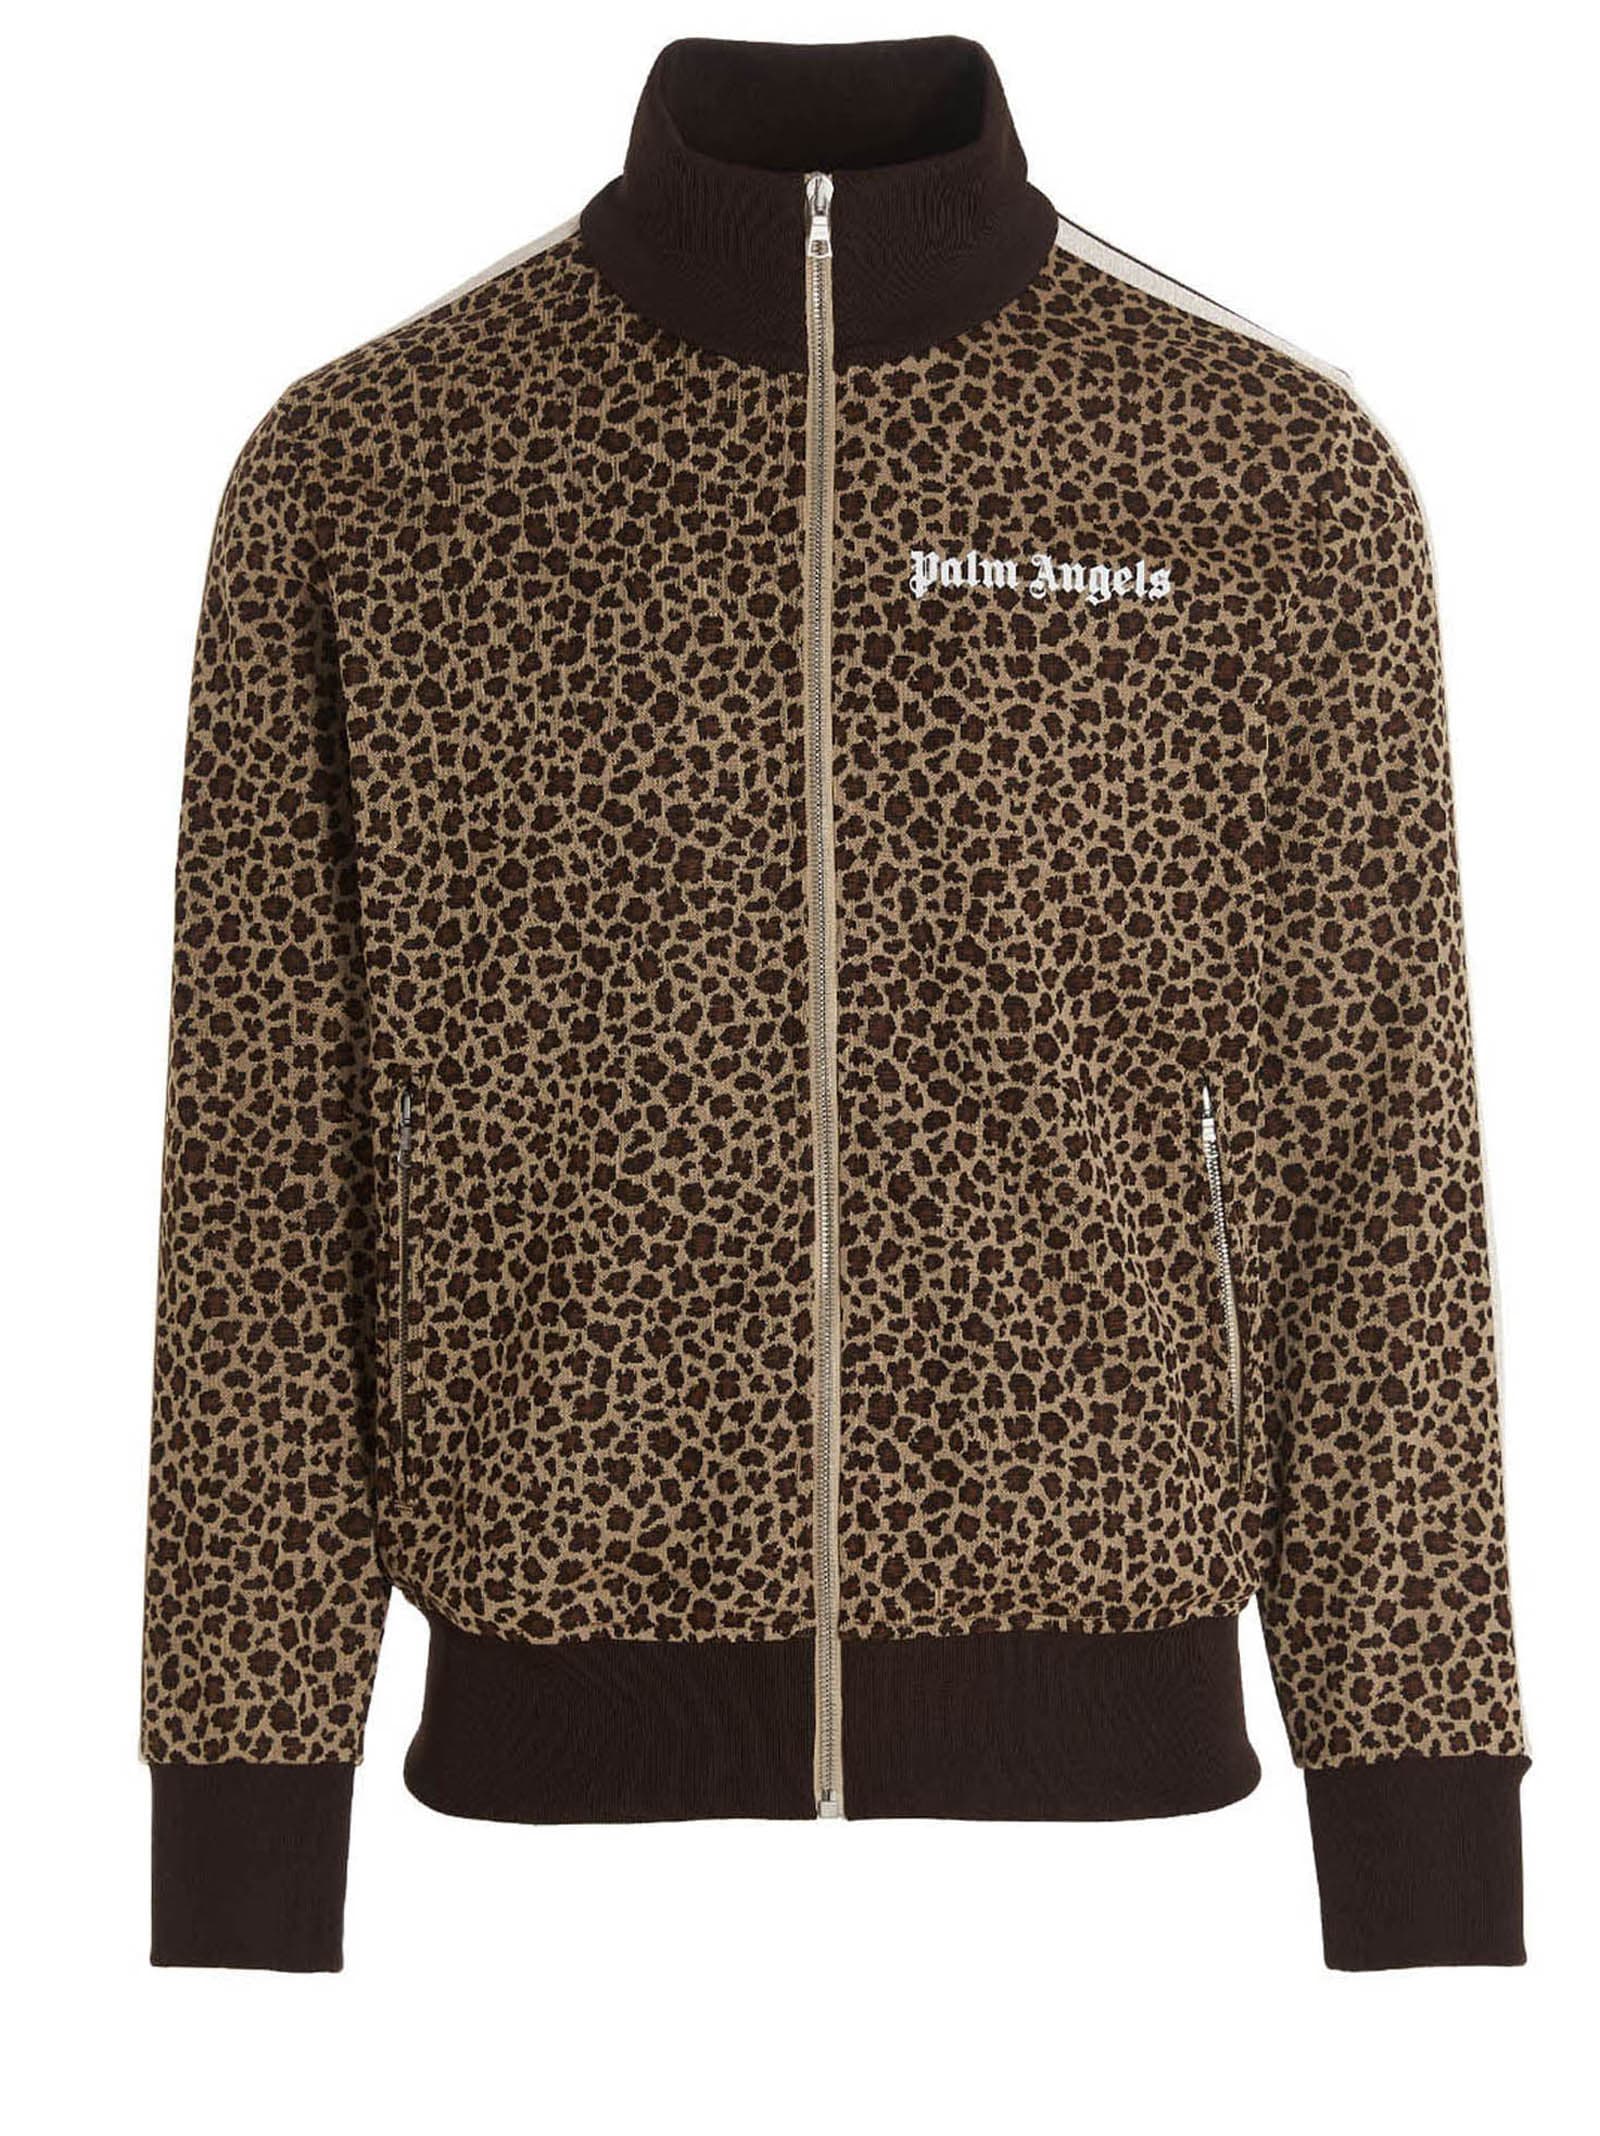 Palm Angels Leopard Jacquard Track Sweatshirt